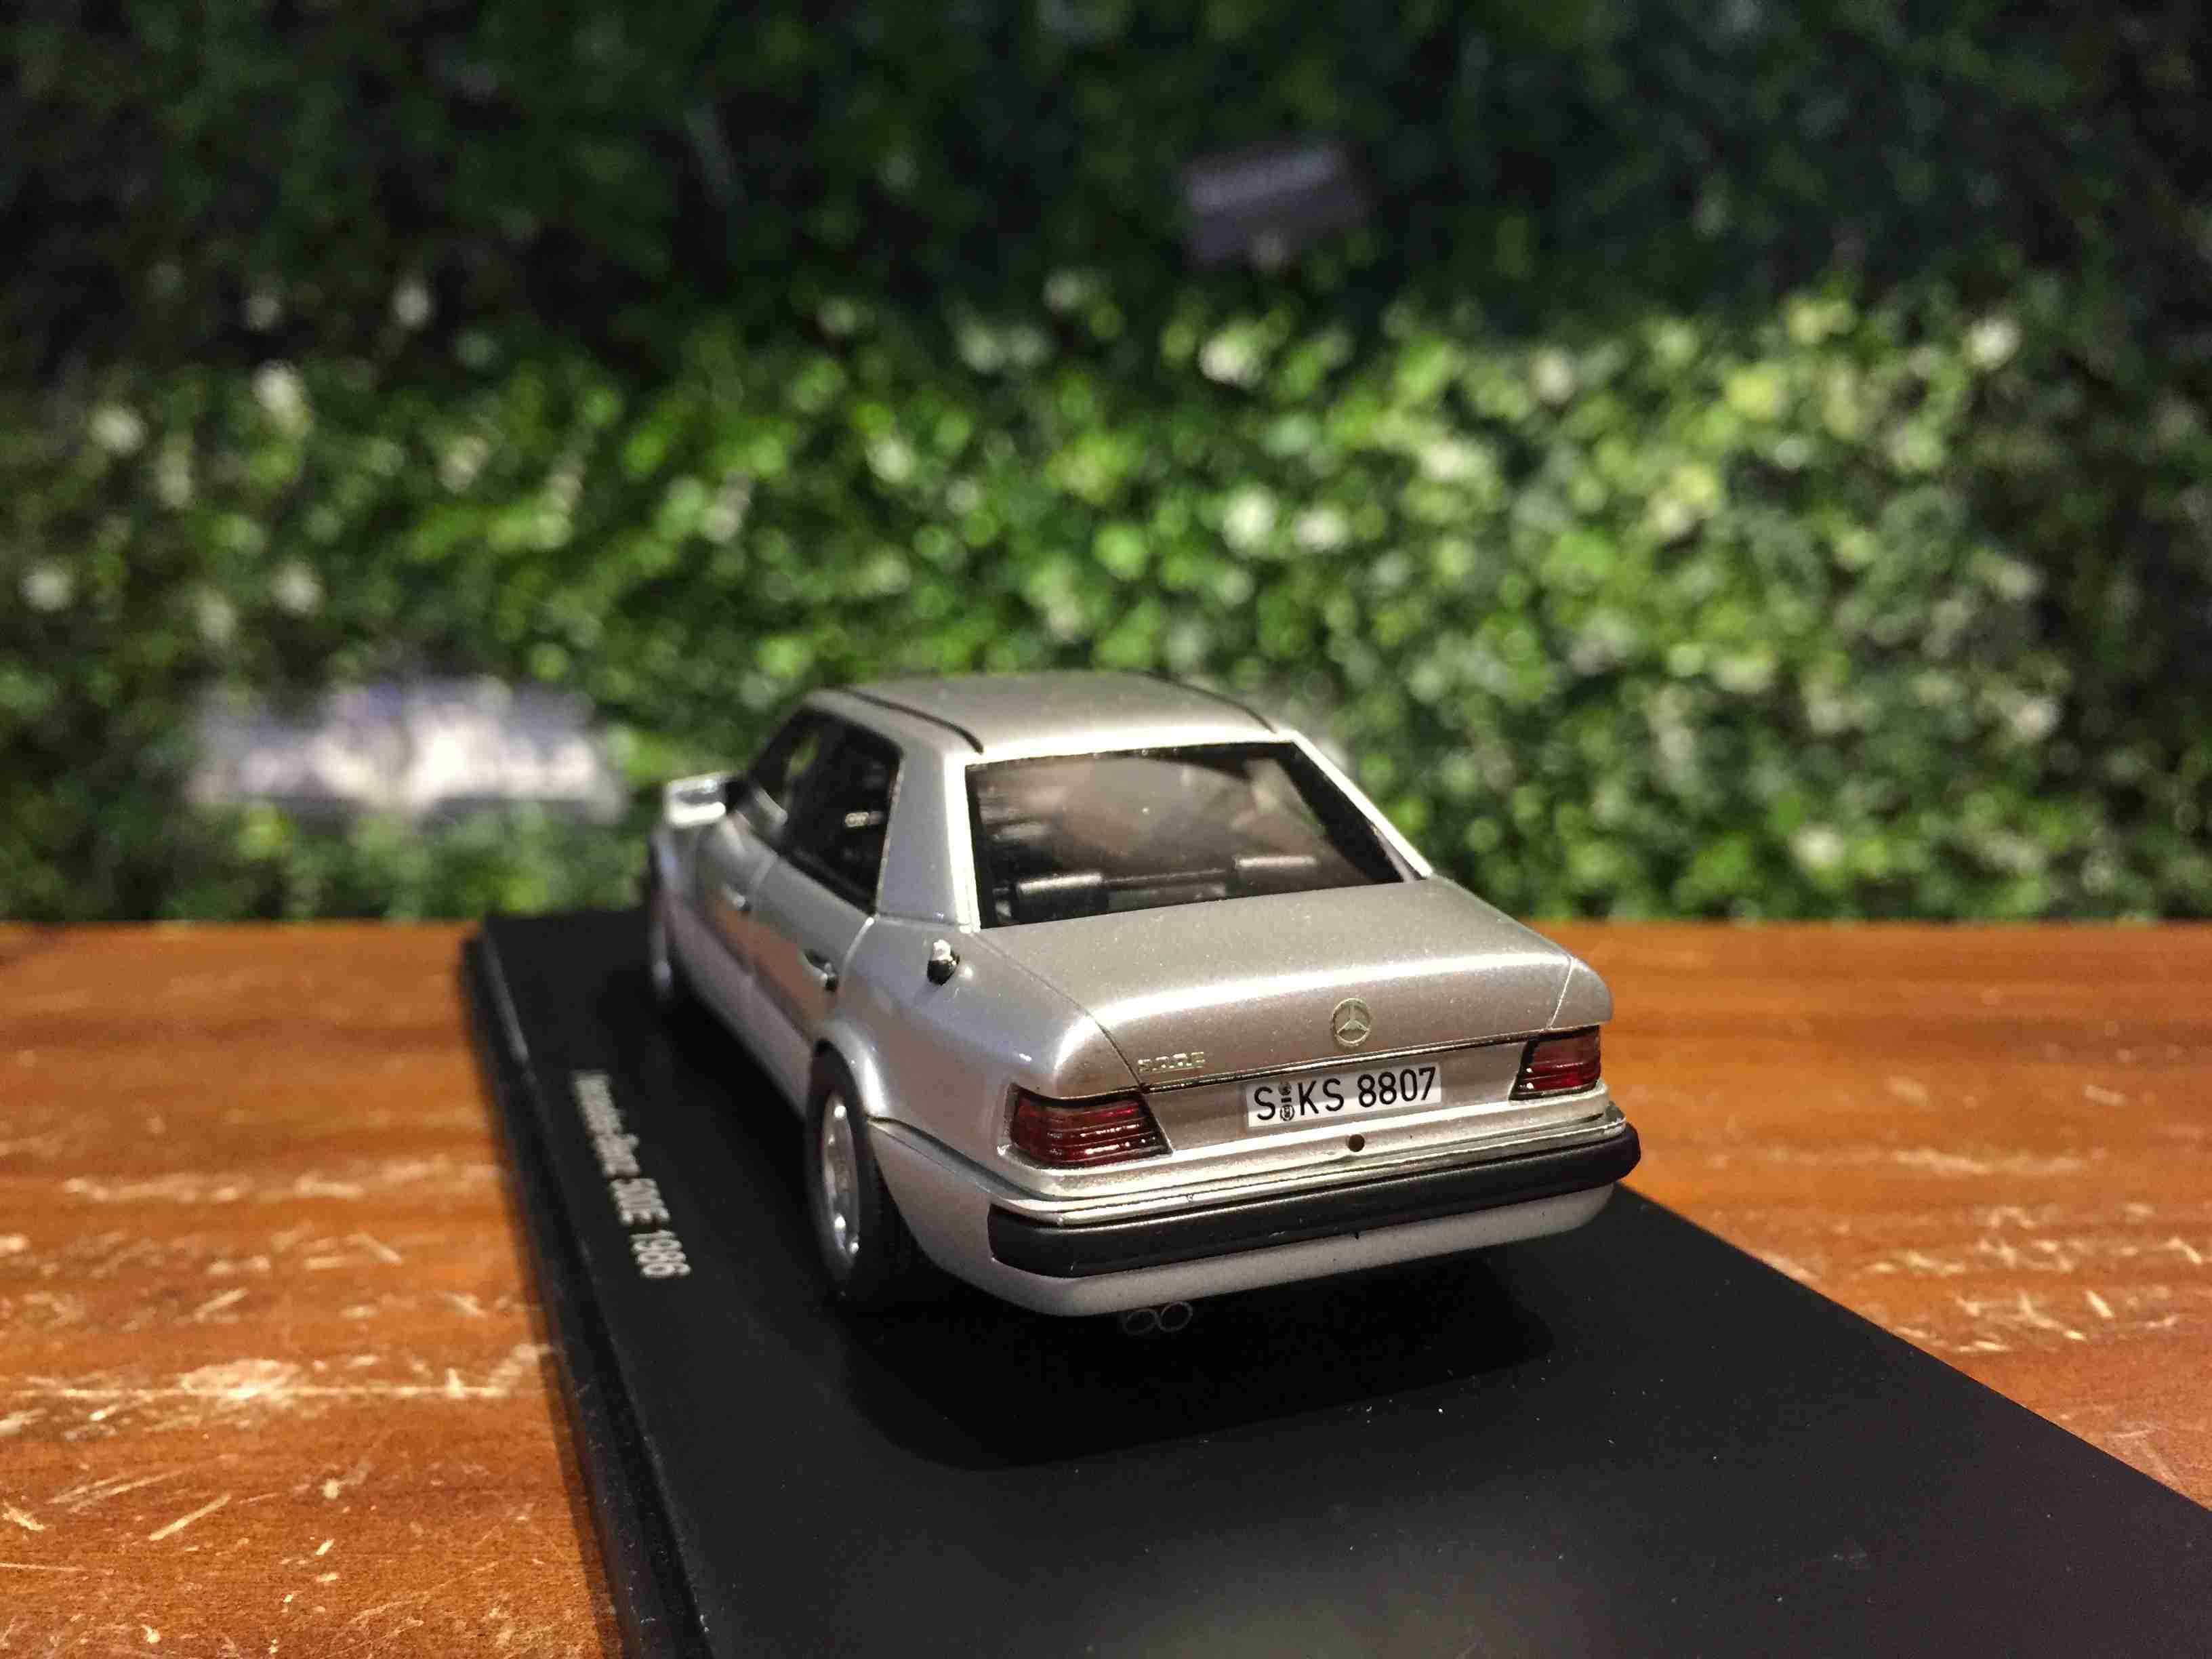 1/43 Spark Mercedes-Benz 500E (W124) 1986 Silver S1021【MGM】